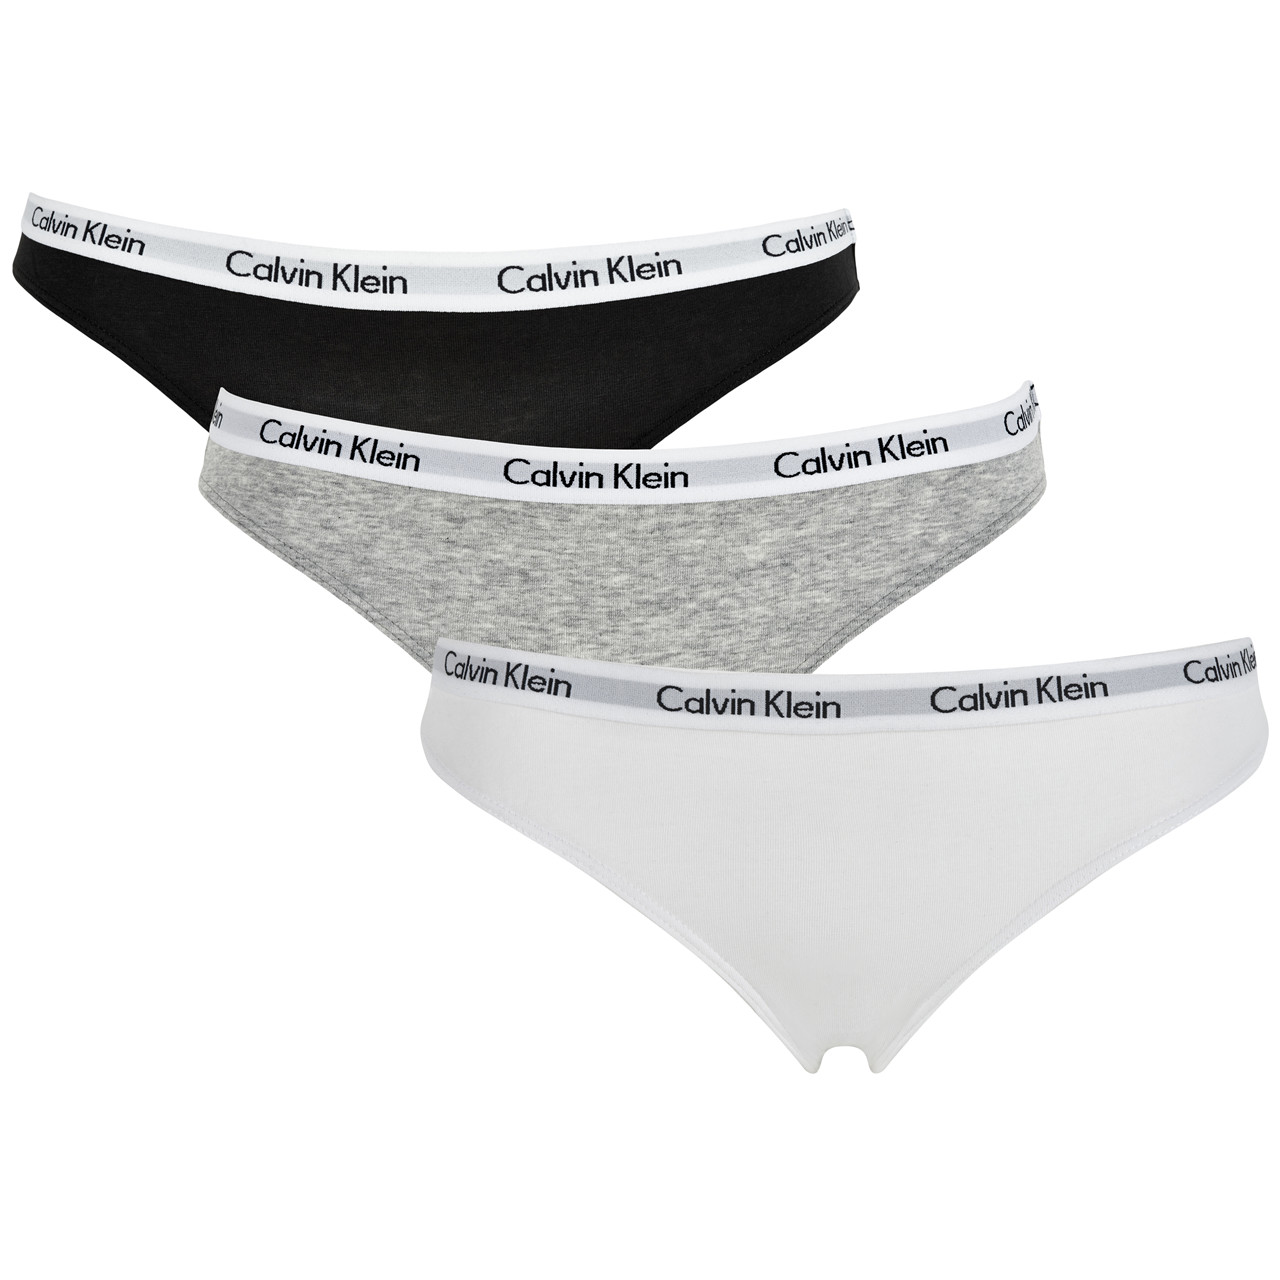 Calvin Klein Lingeri Tai 3-pak, Farve: Sort/grå, Størrelse: XL, Dame